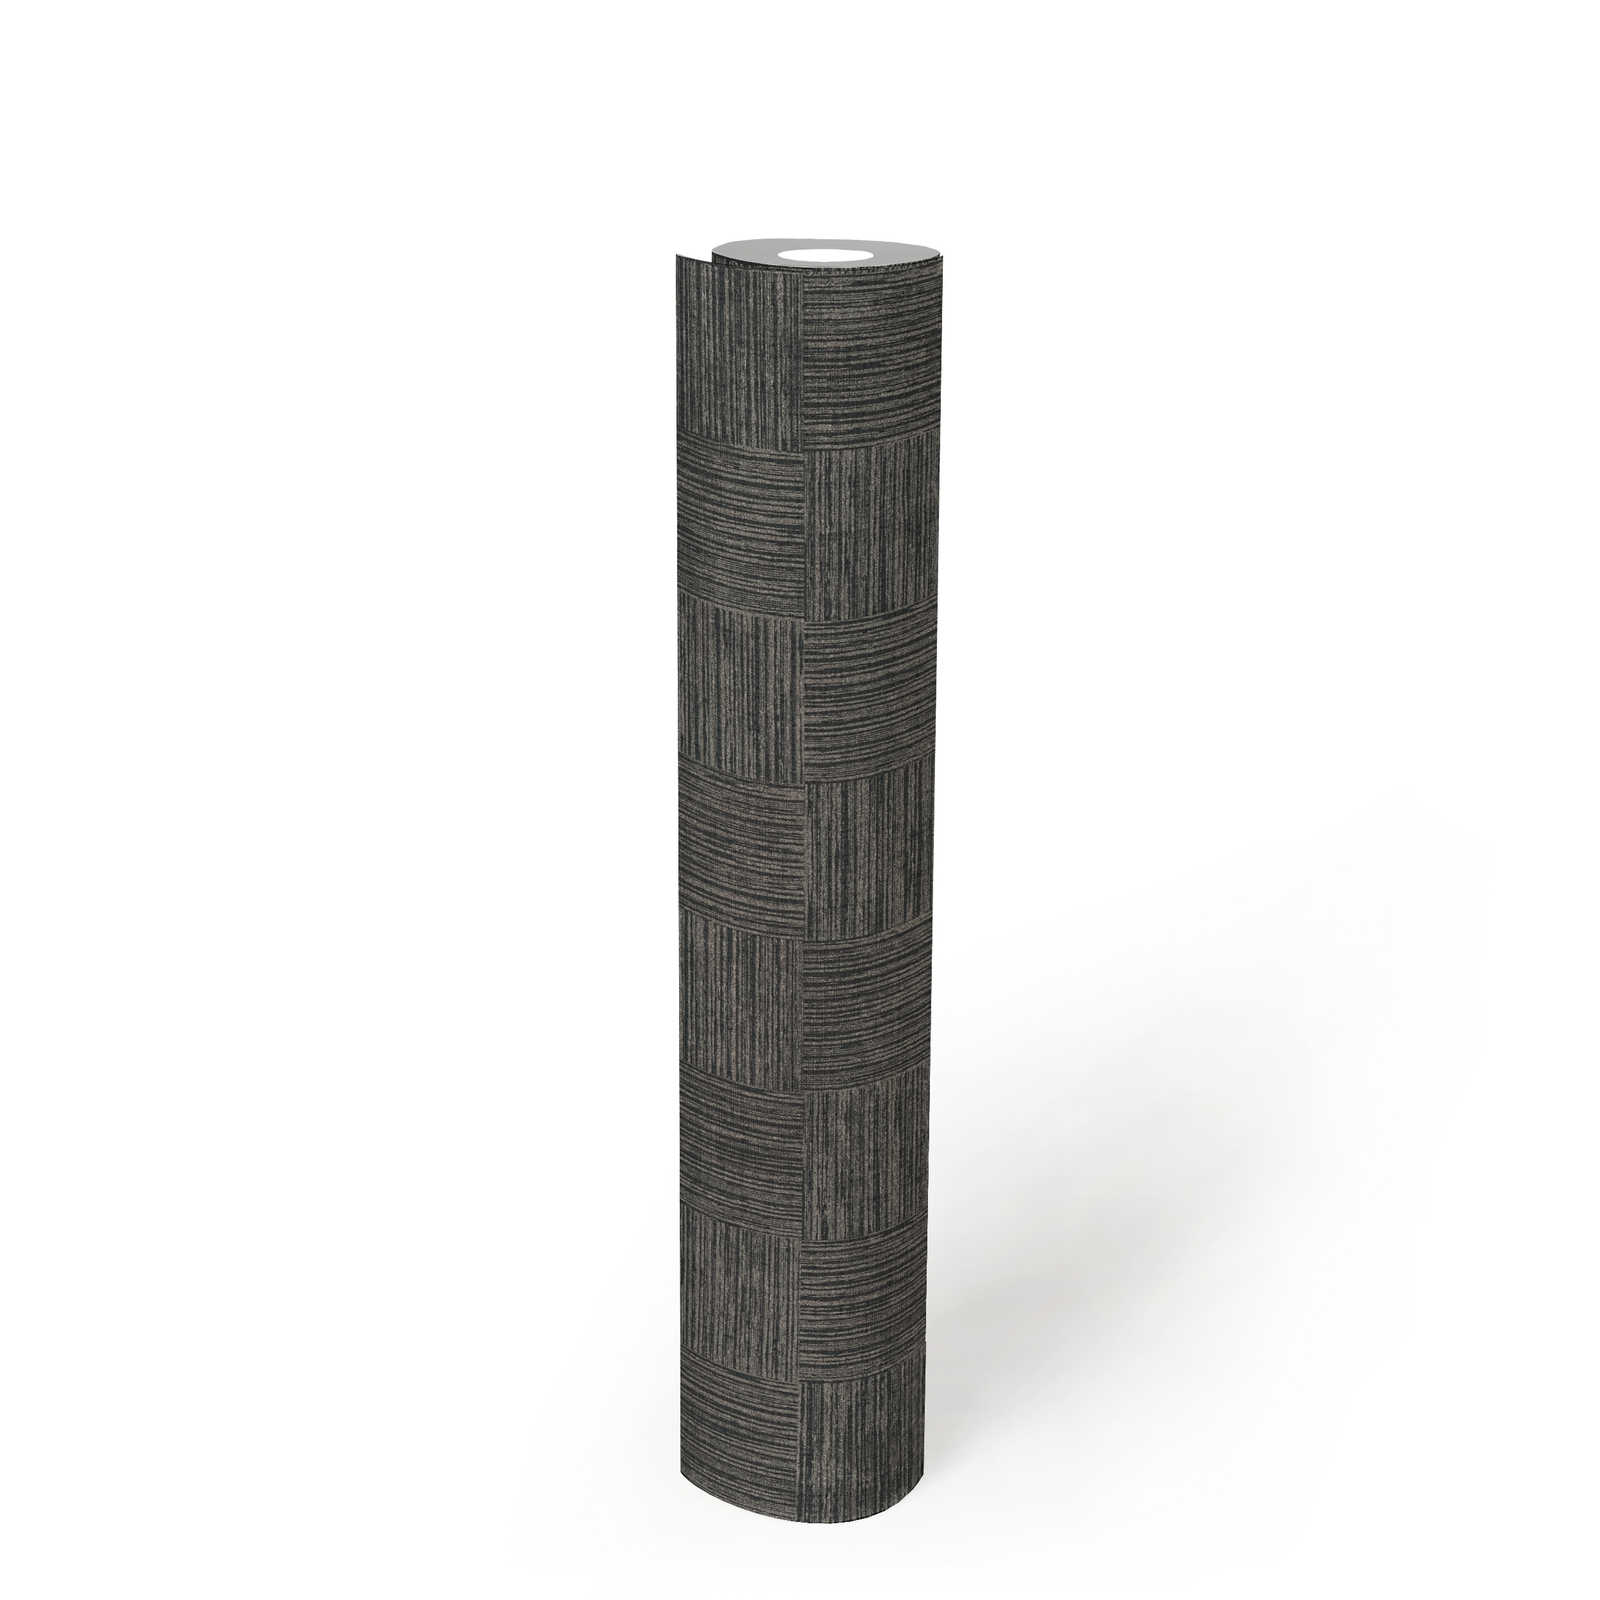             Wood look wallpaper mottled structure - metallic, black
        